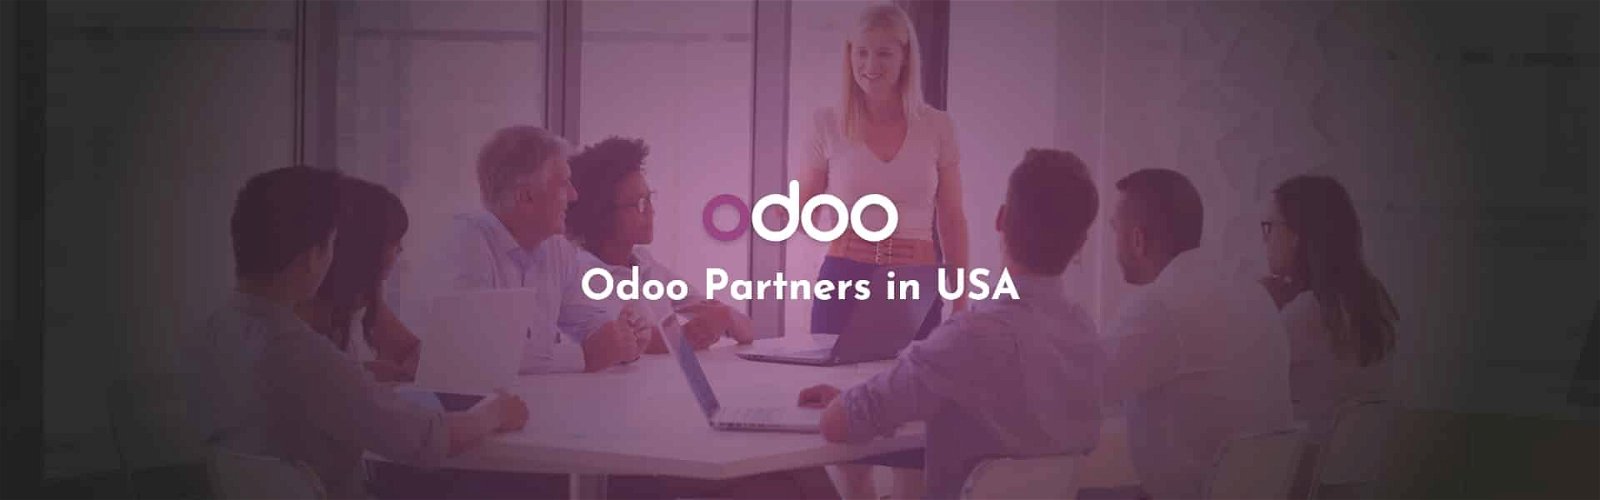 Odoo Partners in USA